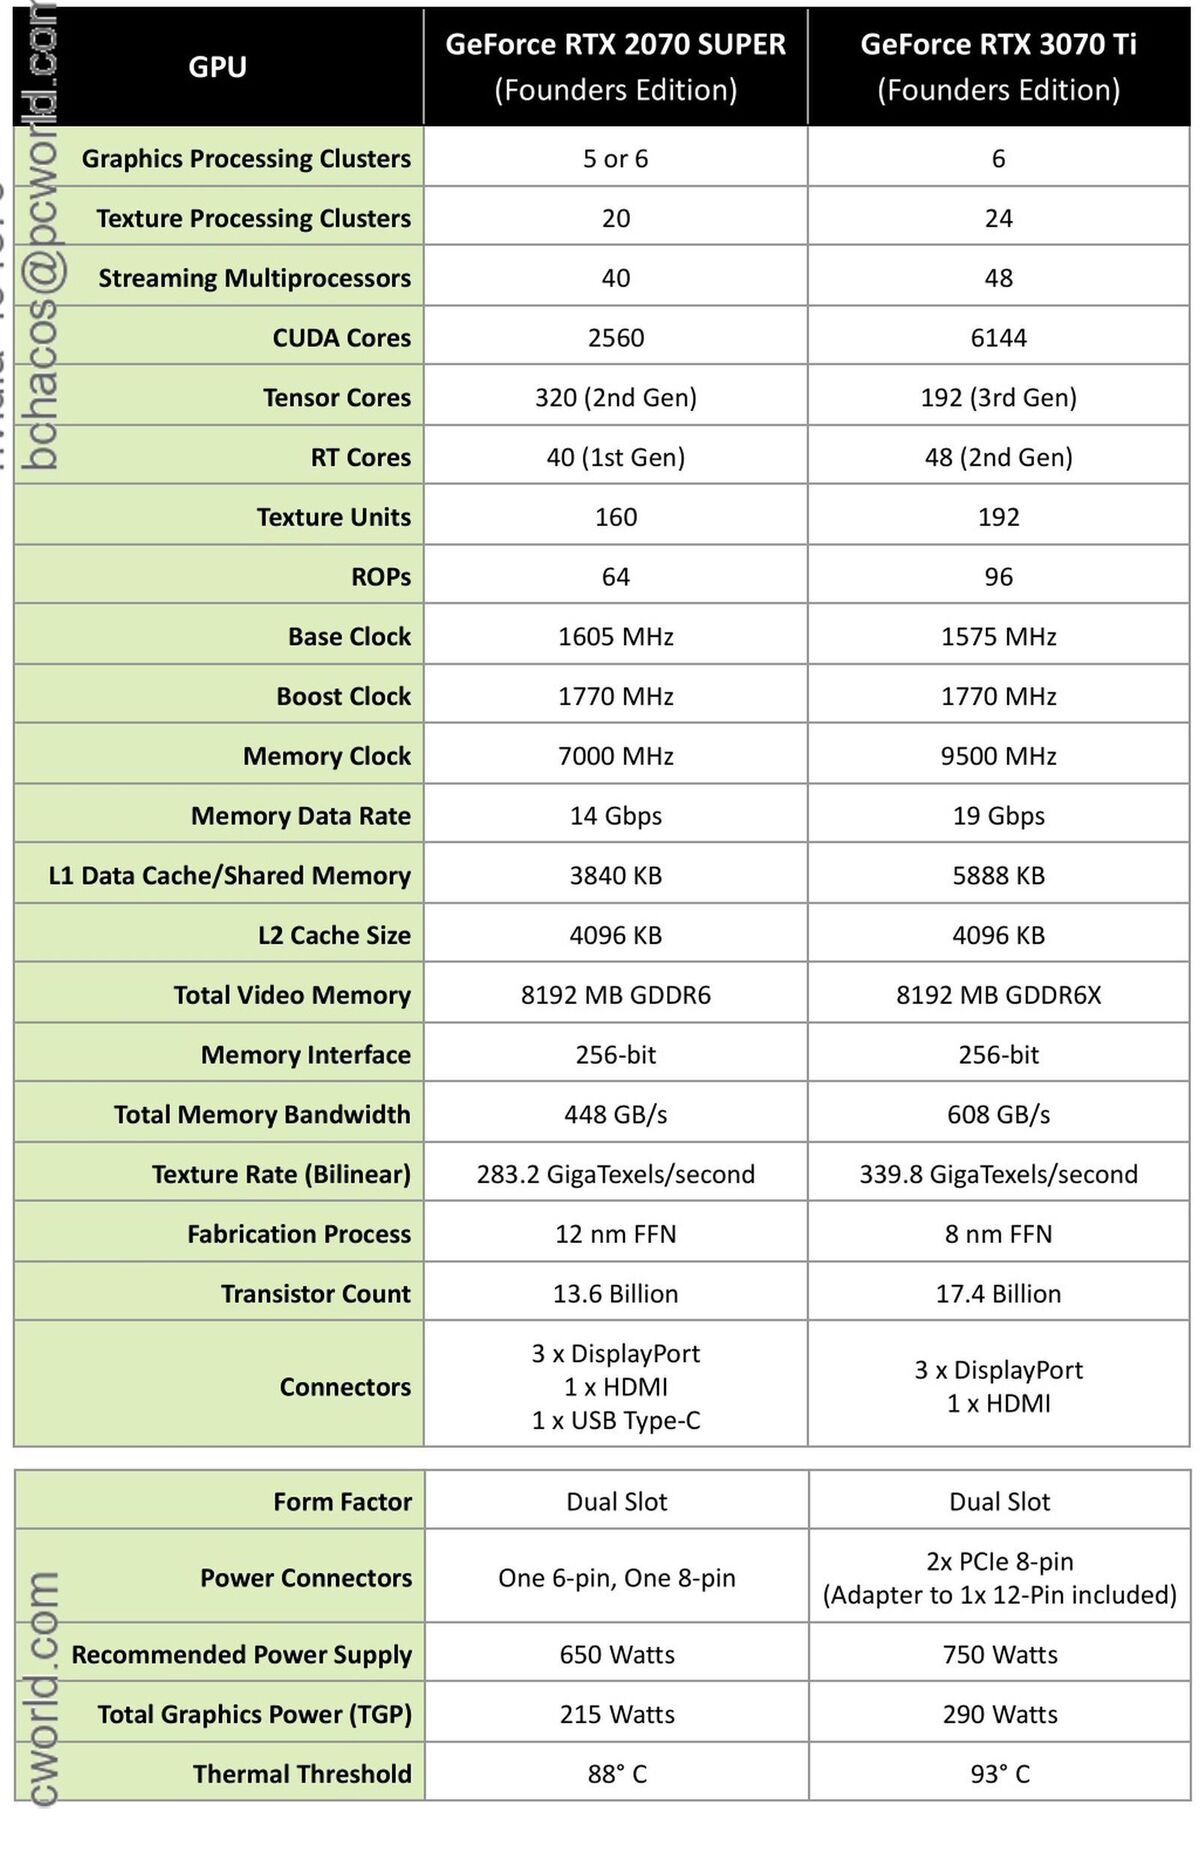 NVIDIA GeForce RTX 3070 Ti GPU - Benchmarks and Specs -   Tech